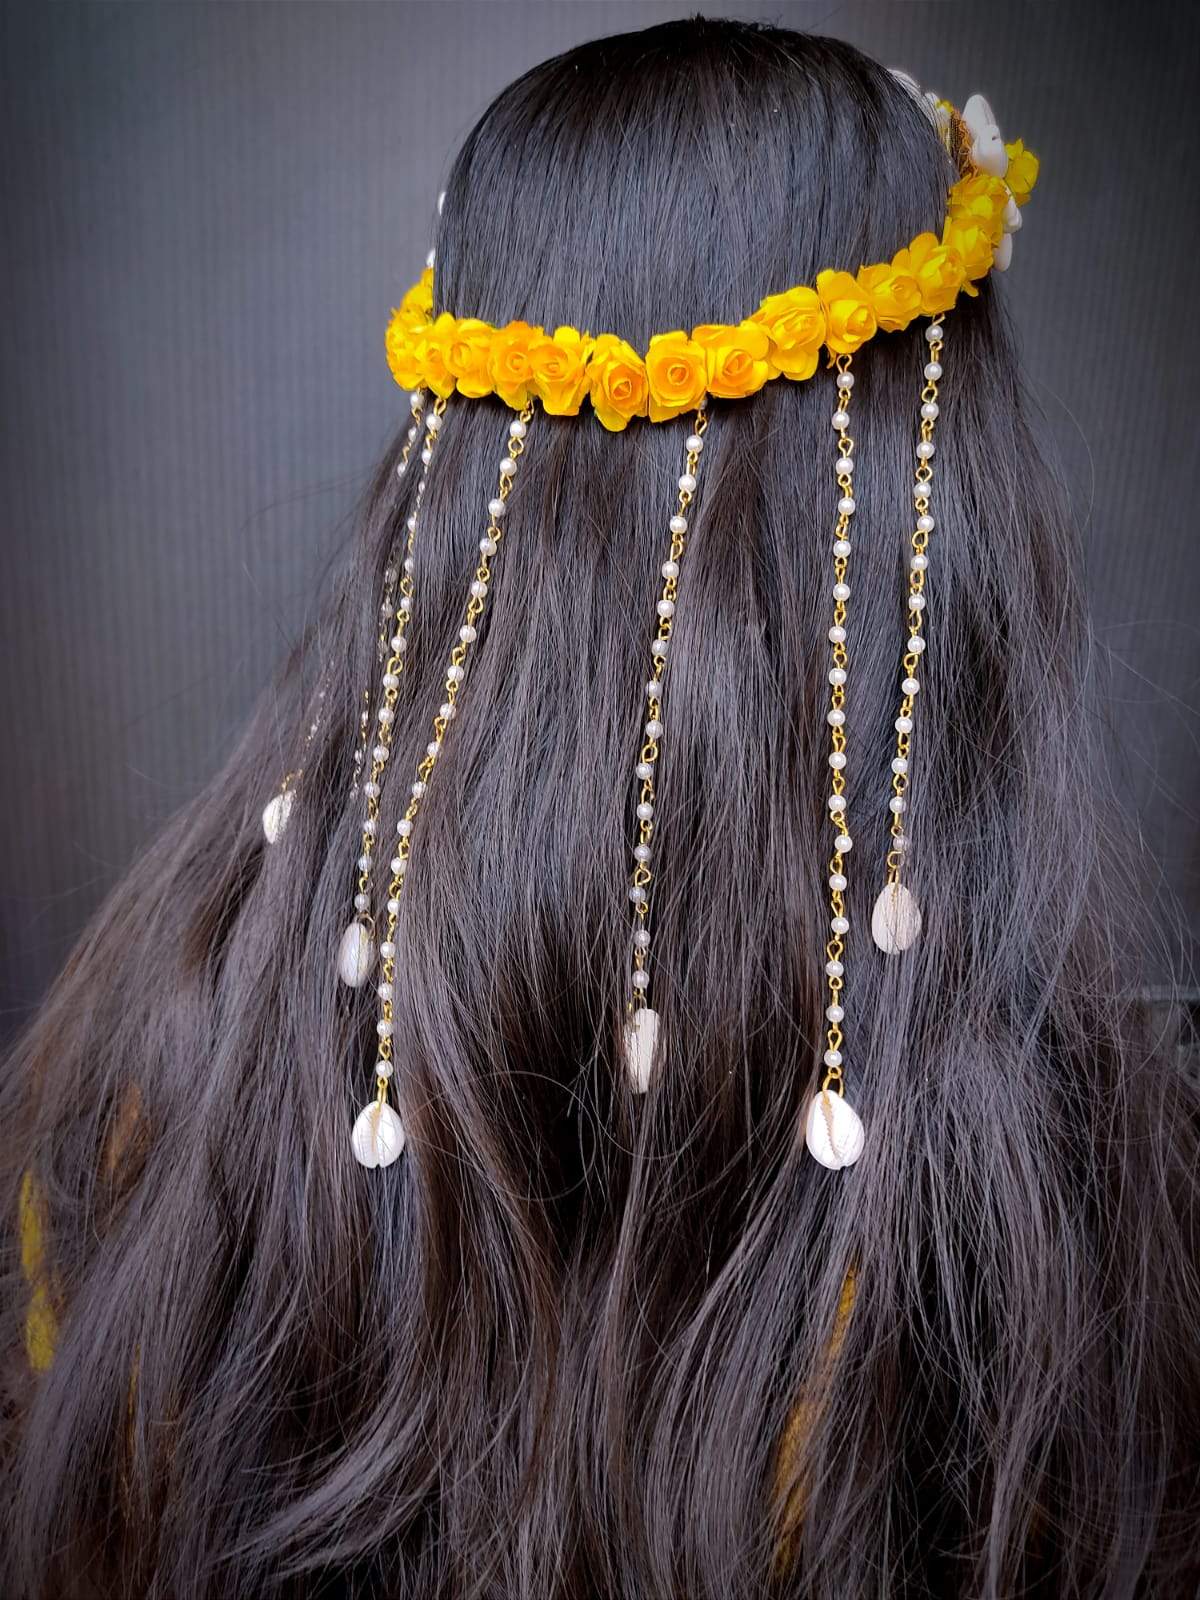 Flower Hair Tiara For Girl / bride / Hair Accessories/ Shell Tiara Set for Birthday 